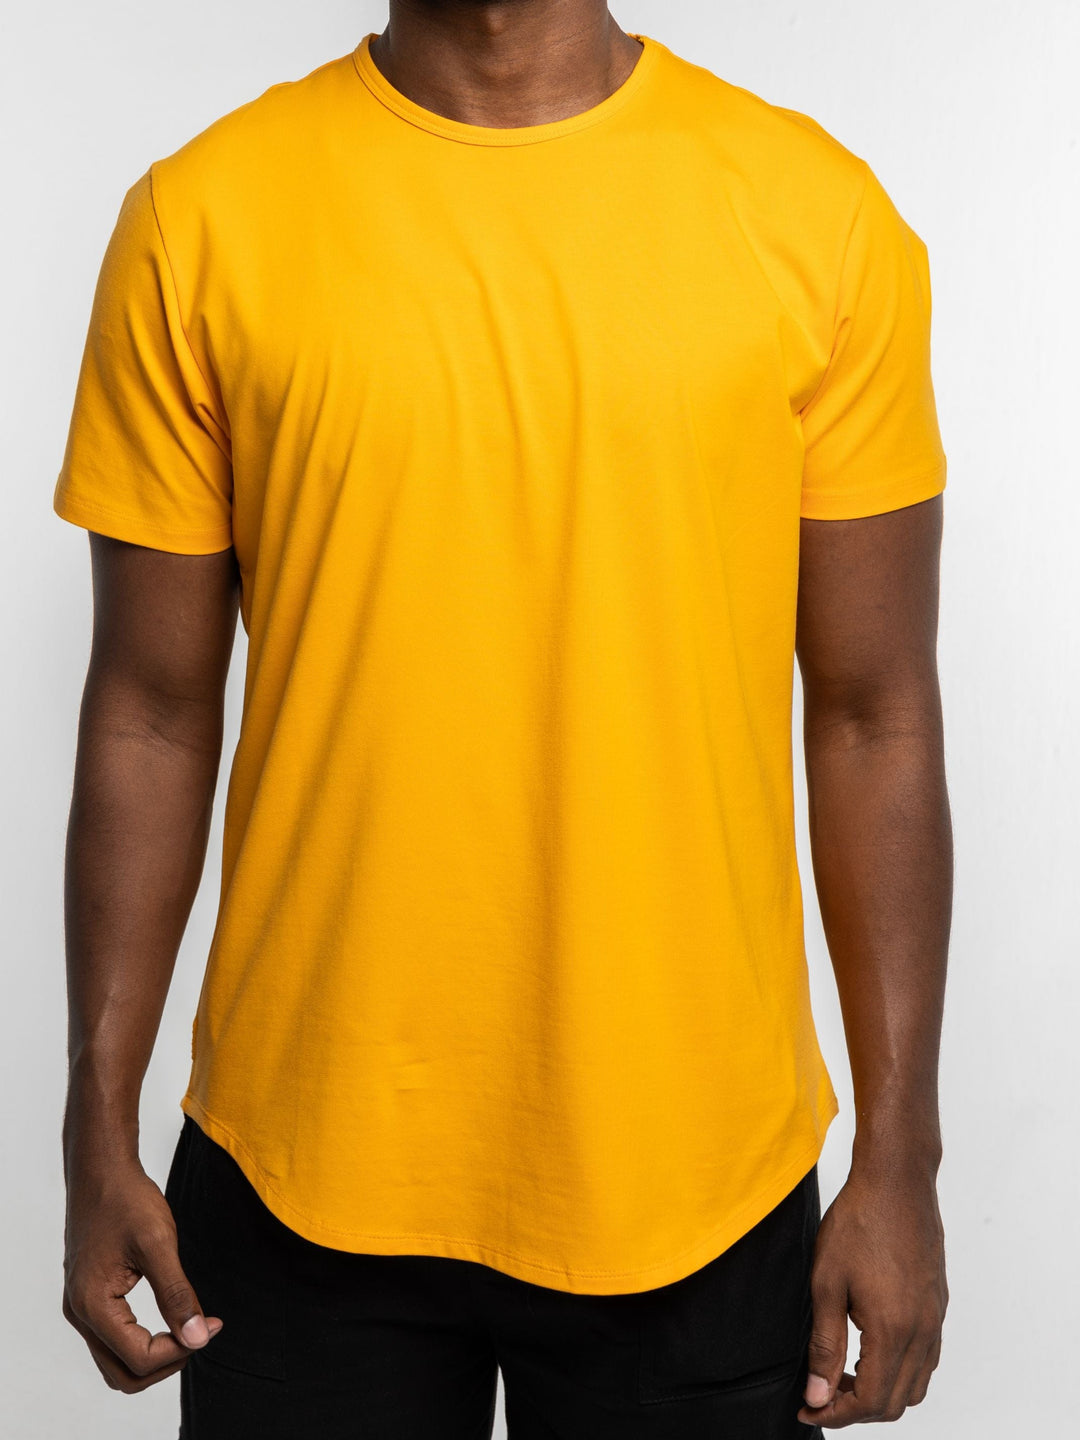 Nuuk Orange Curved Hem T-Shirt: SLS Comfort